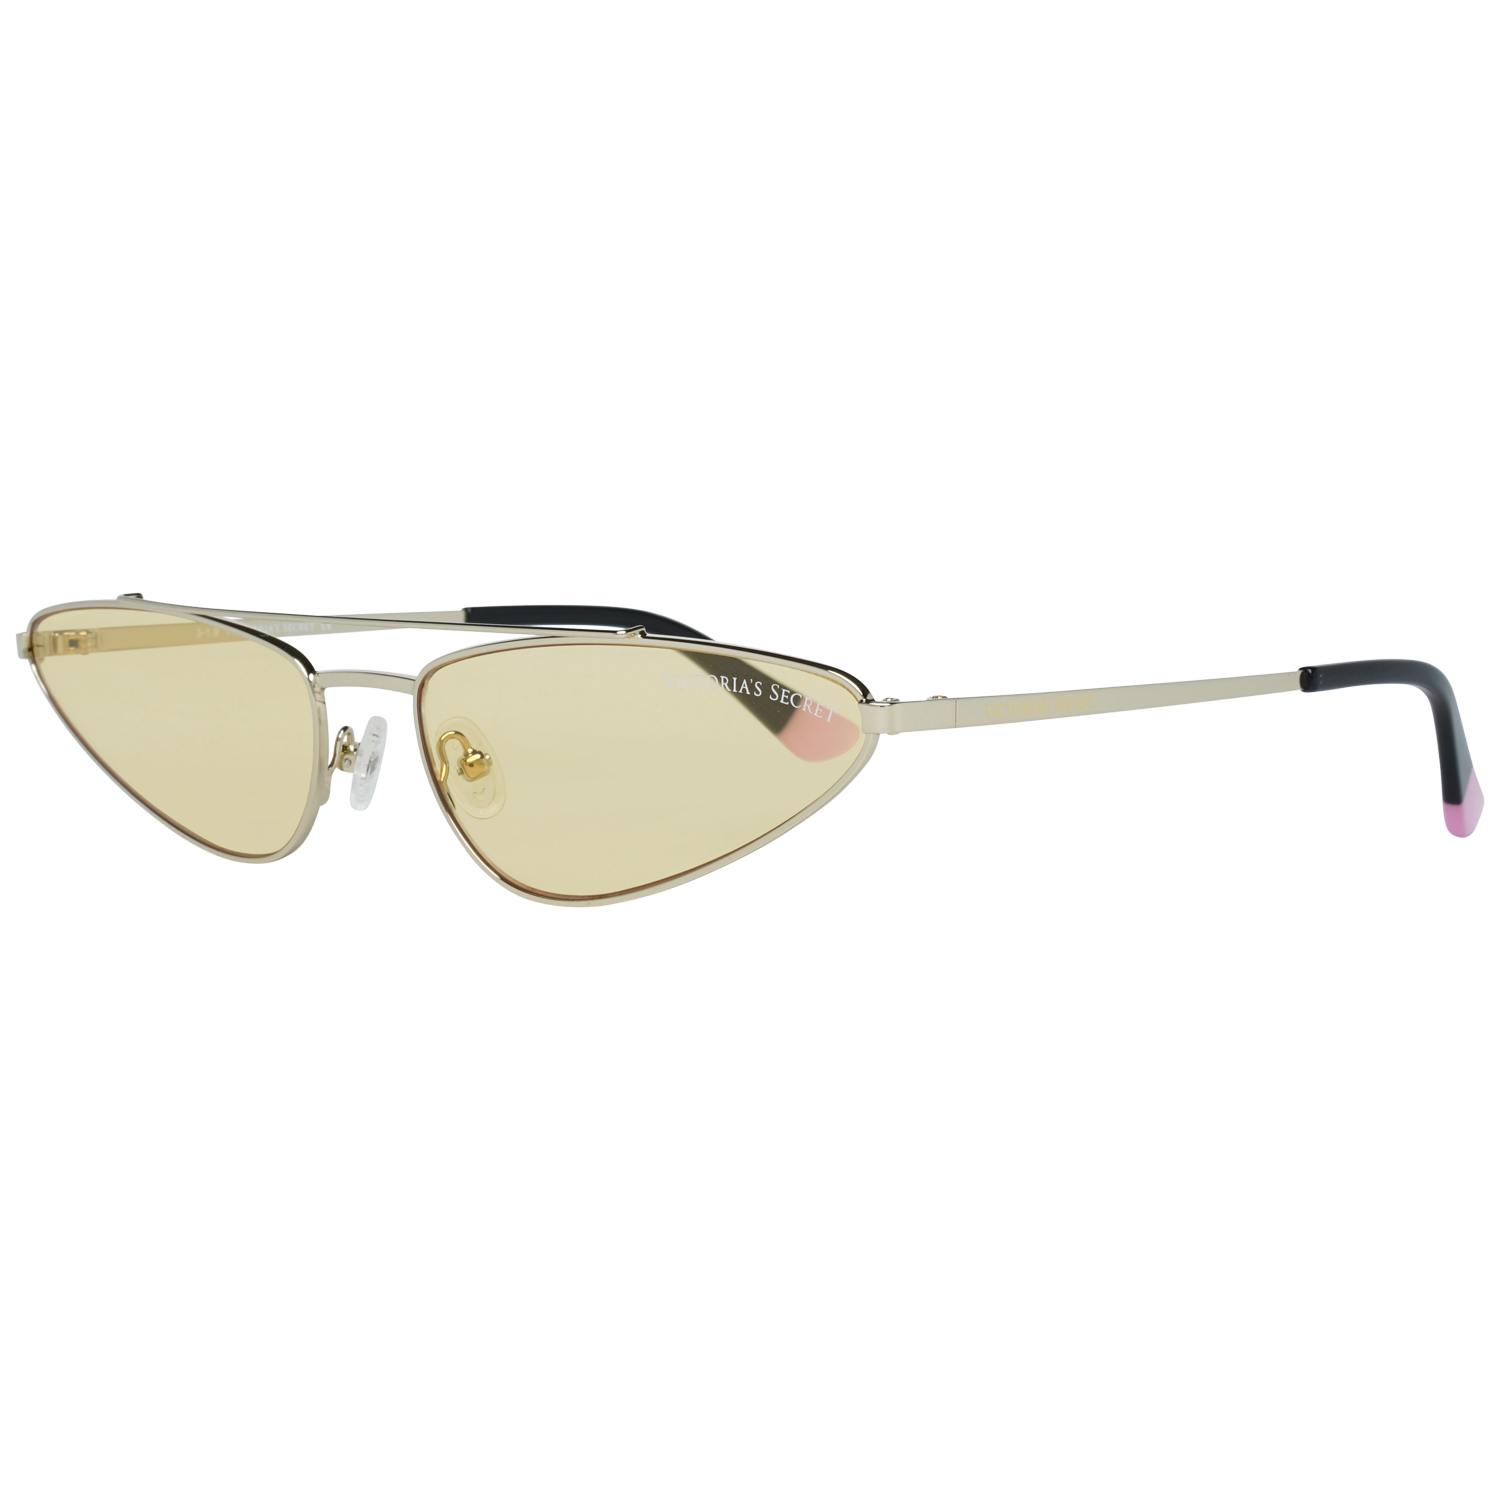 Victoria's Secret Sunglasses VS0019 28F 66 Gold